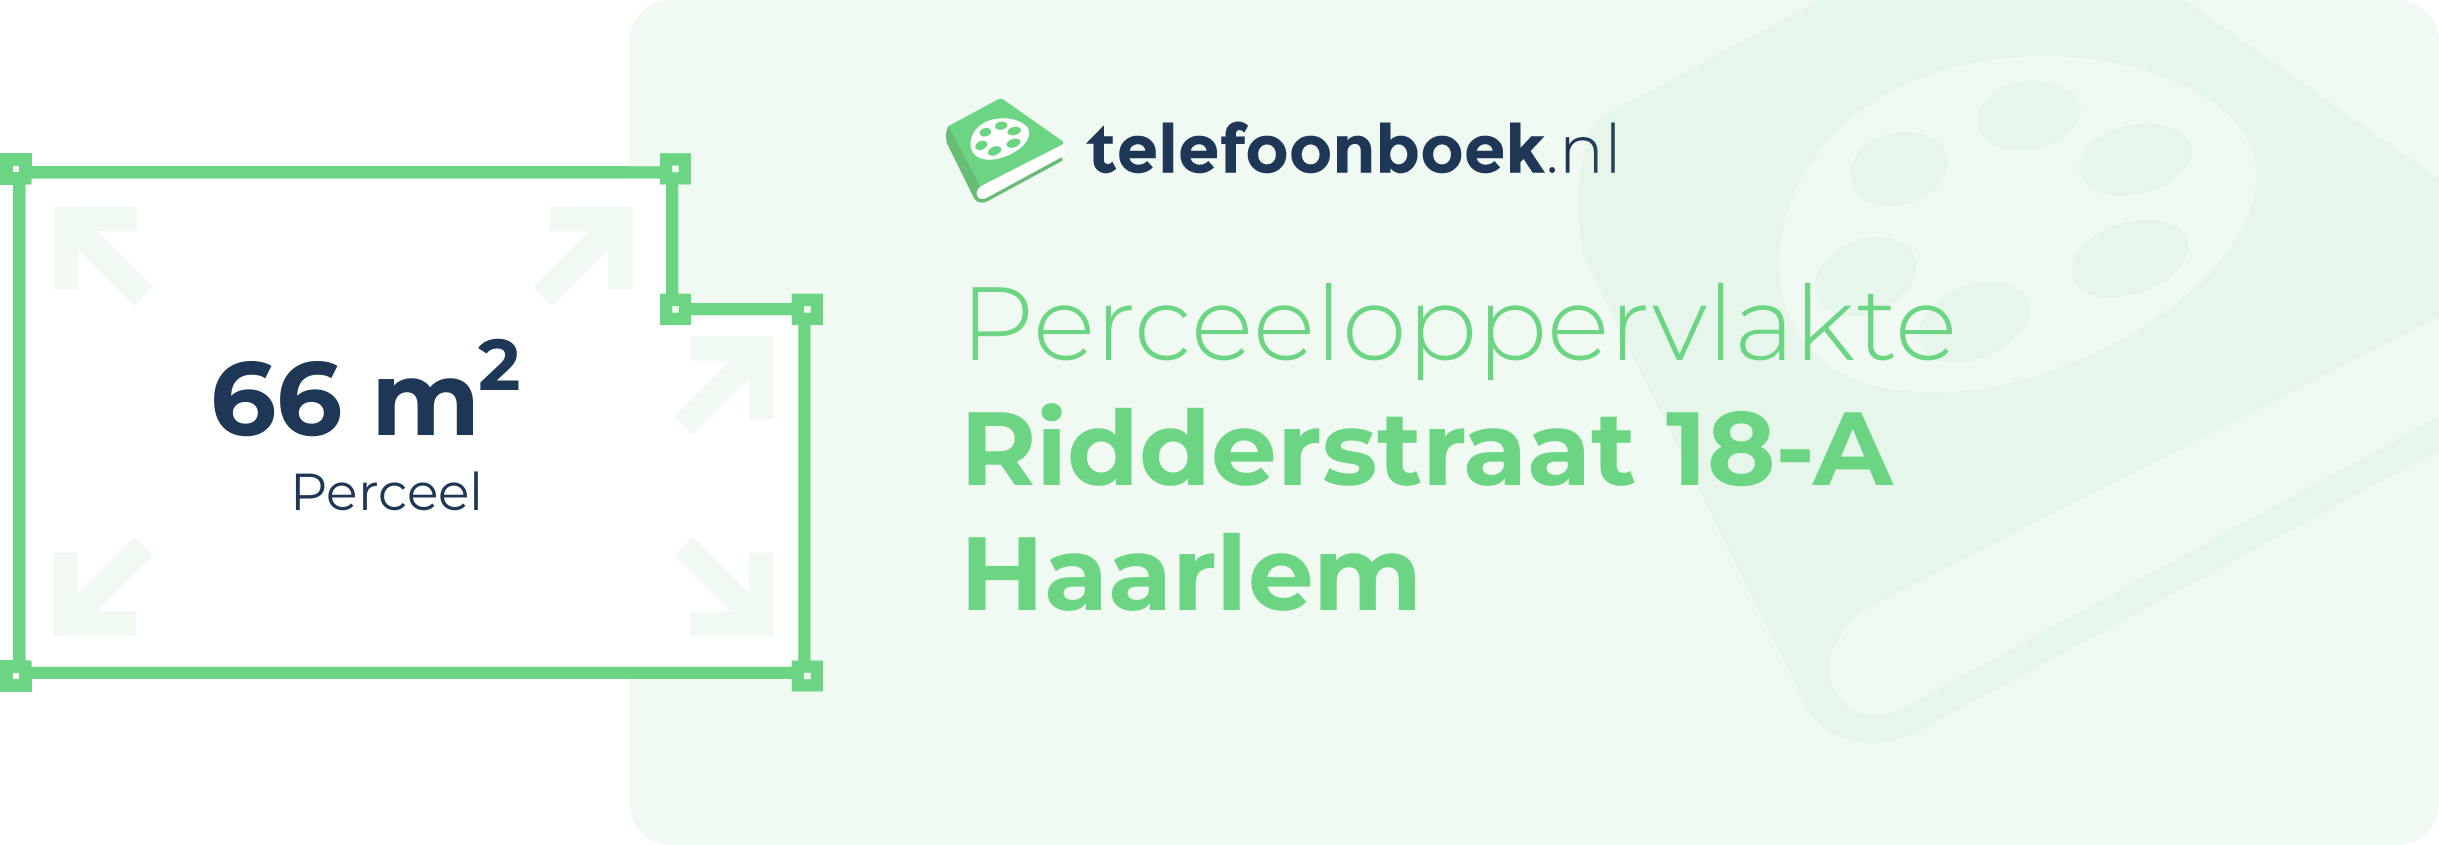 Perceeloppervlakte Ridderstraat 18-A Haarlem